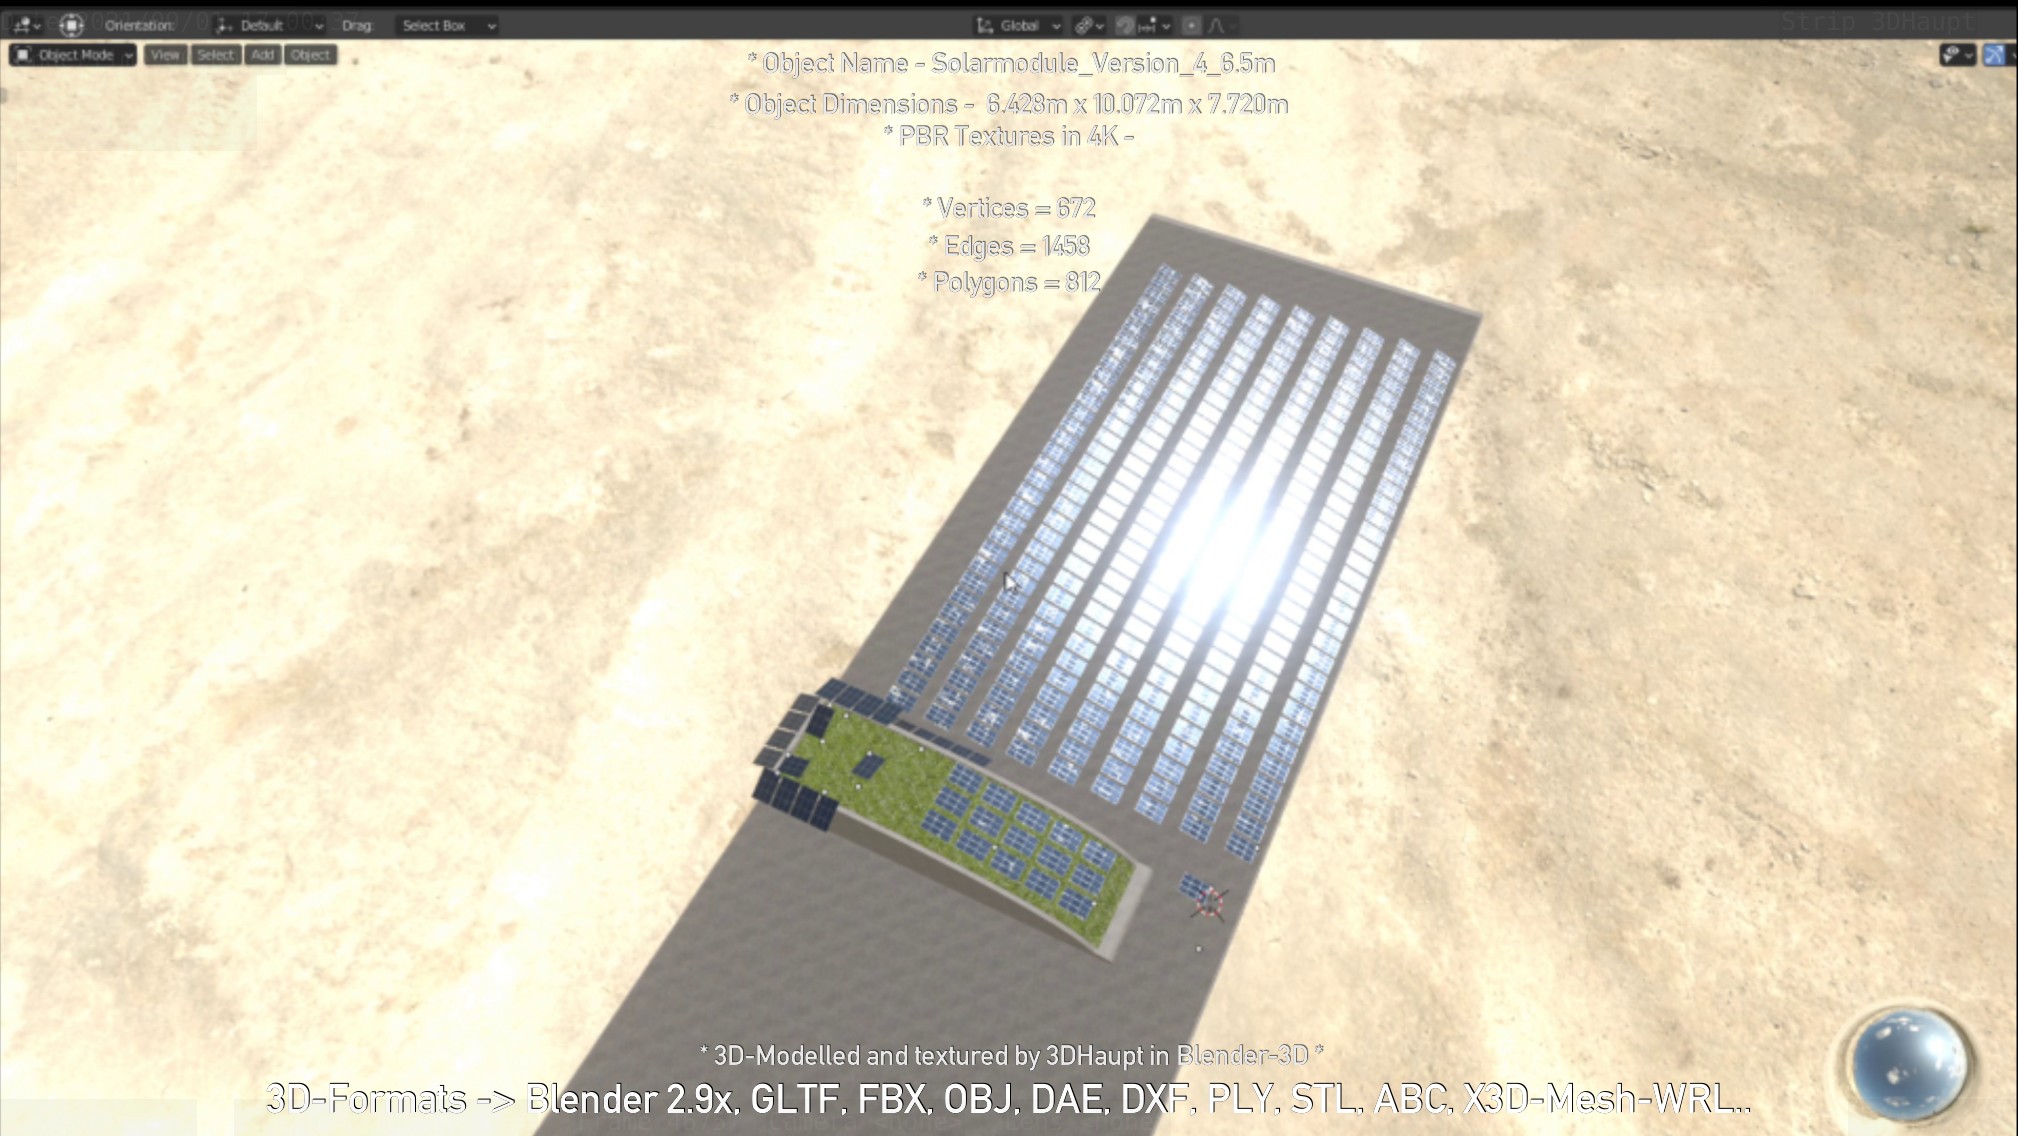 Solarmodule Version 4 - 6500mm (Blender-2.93 Cycles Render)